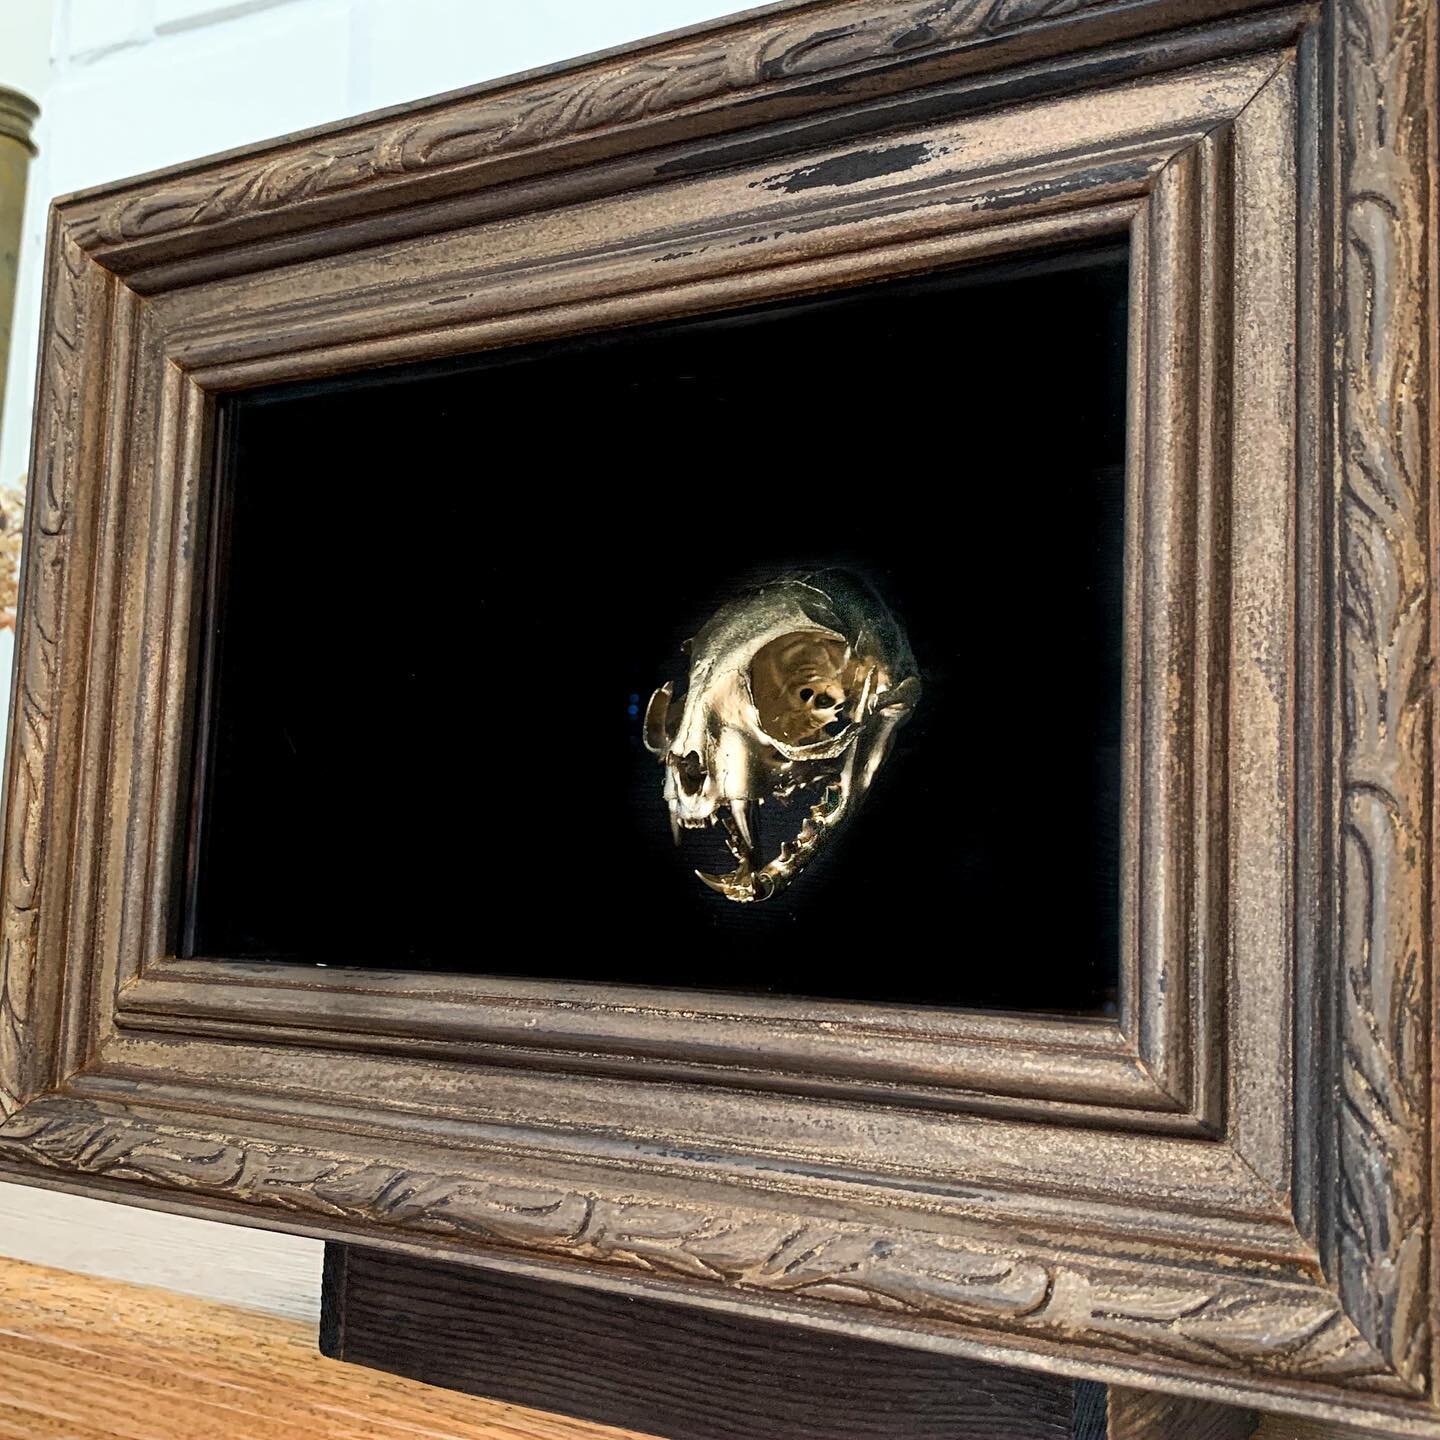 New work available. Gold painted house cat, reclaimed shelving box, vintage frame. .
.
.
.
.
.
#taxidermy #oddities #vultureculture #taxidermyart #curiosities #oddity #skulls #skull #art  #taxidermist  #curiosity #cabinetofcuriosities #odditiesandcur